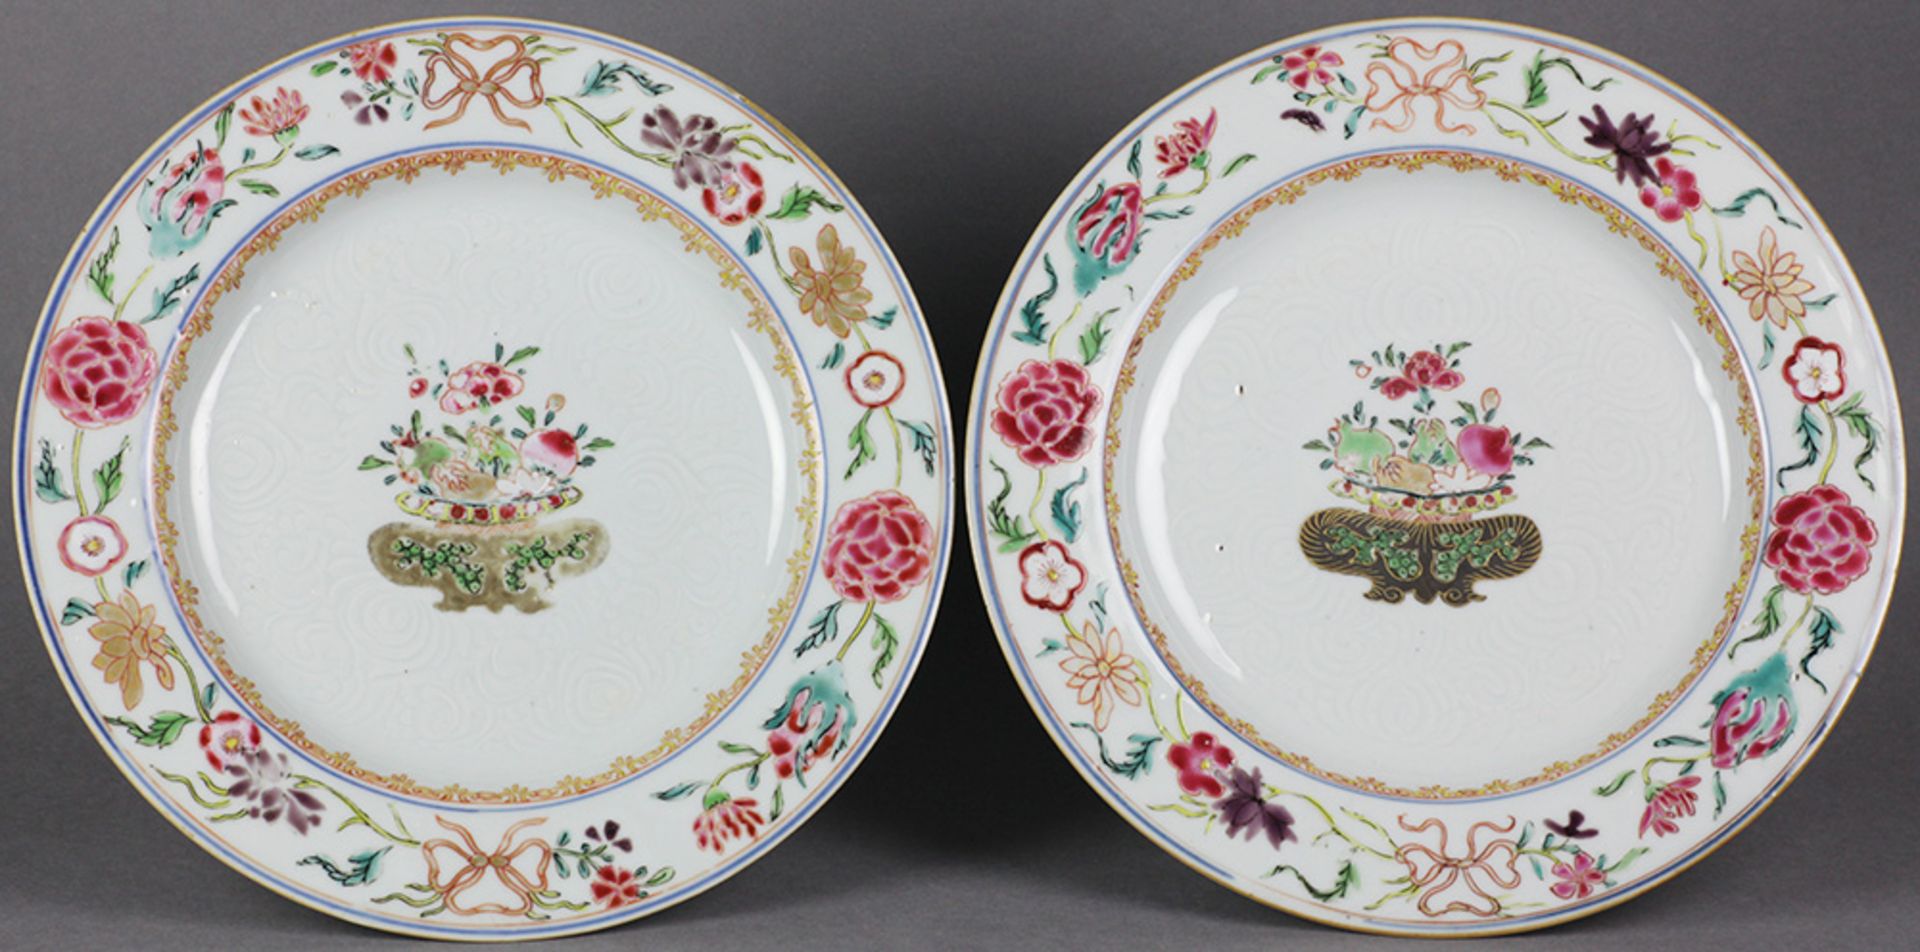 Pair Antique Chinese Bianco Sopra Bianco Floral Plates 18Th C.